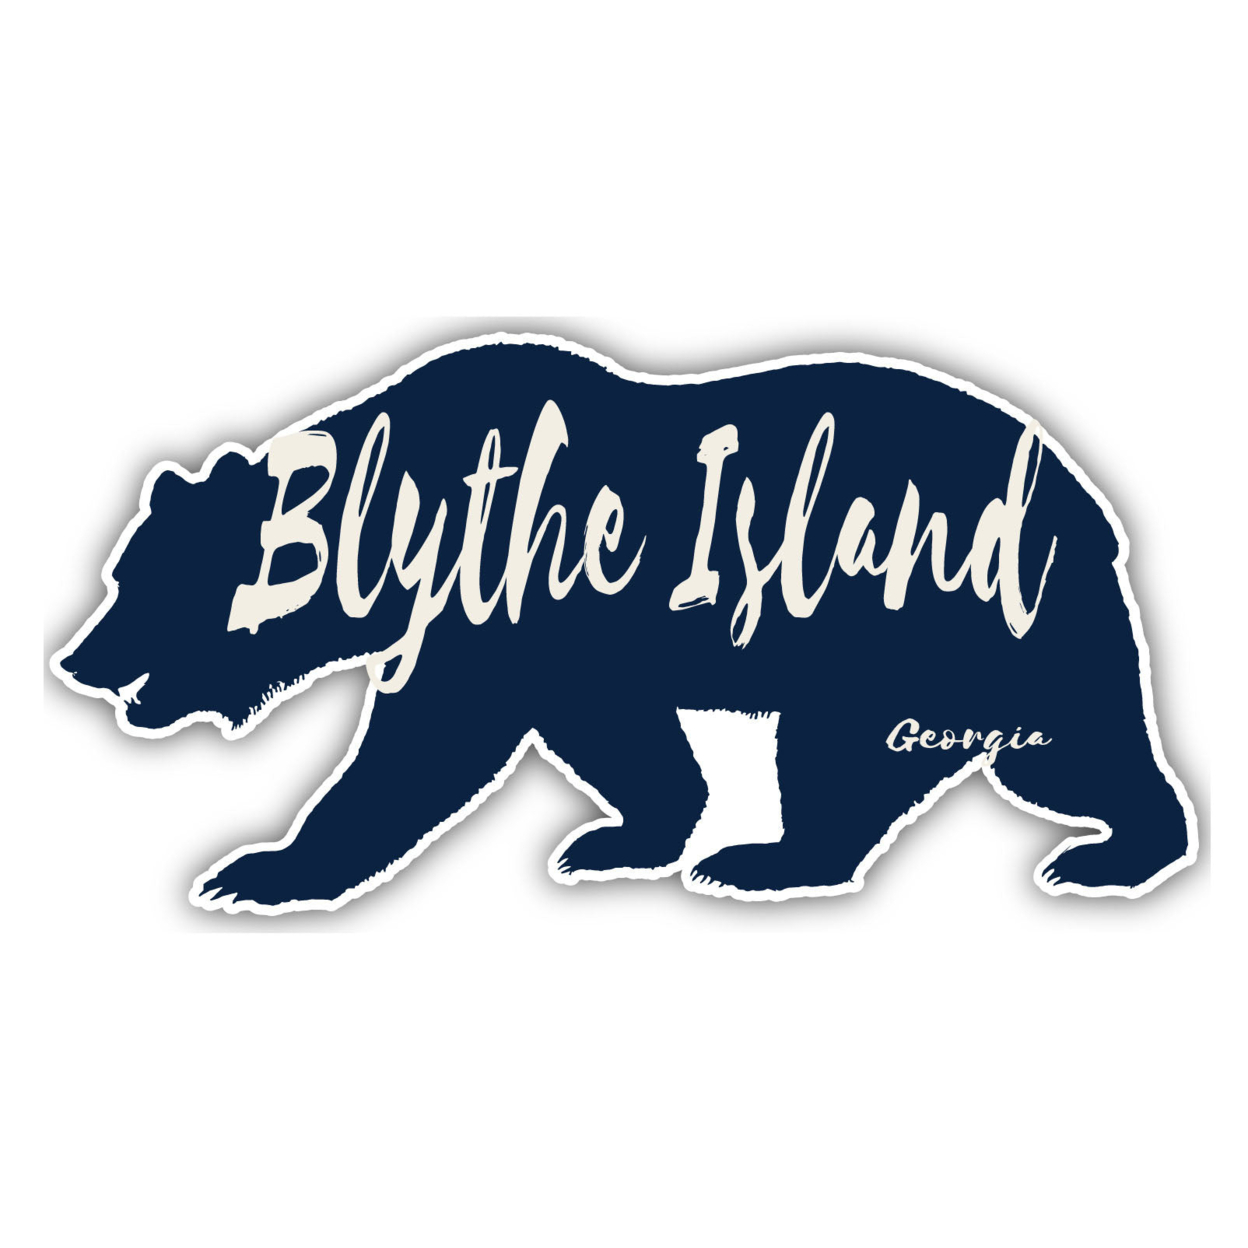 Blythe Island Georgia Souvenir Decorative Stickers (Choose Theme And Size) - Single Unit, 4-Inch, Camp Life